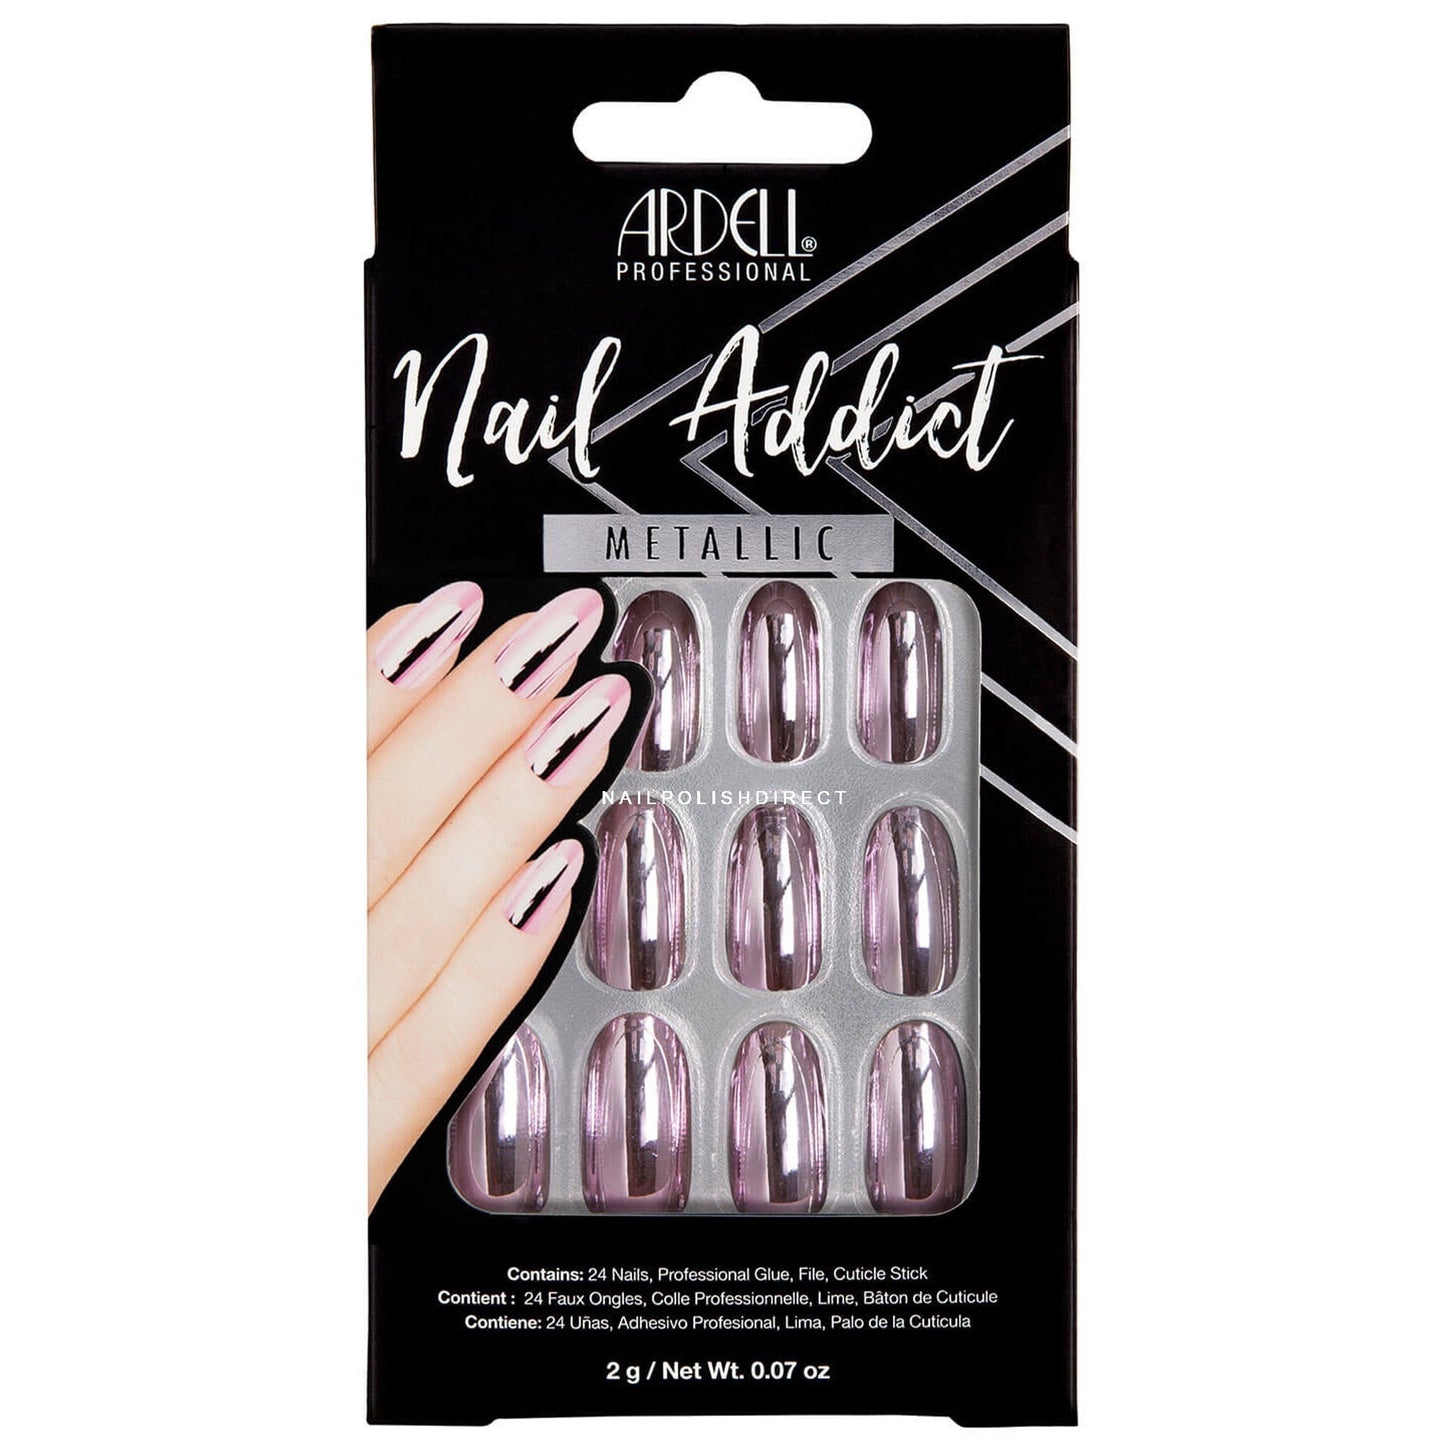 Ardell Nail Addict Metallic False Nails - Metallic Pink (24 Nails)